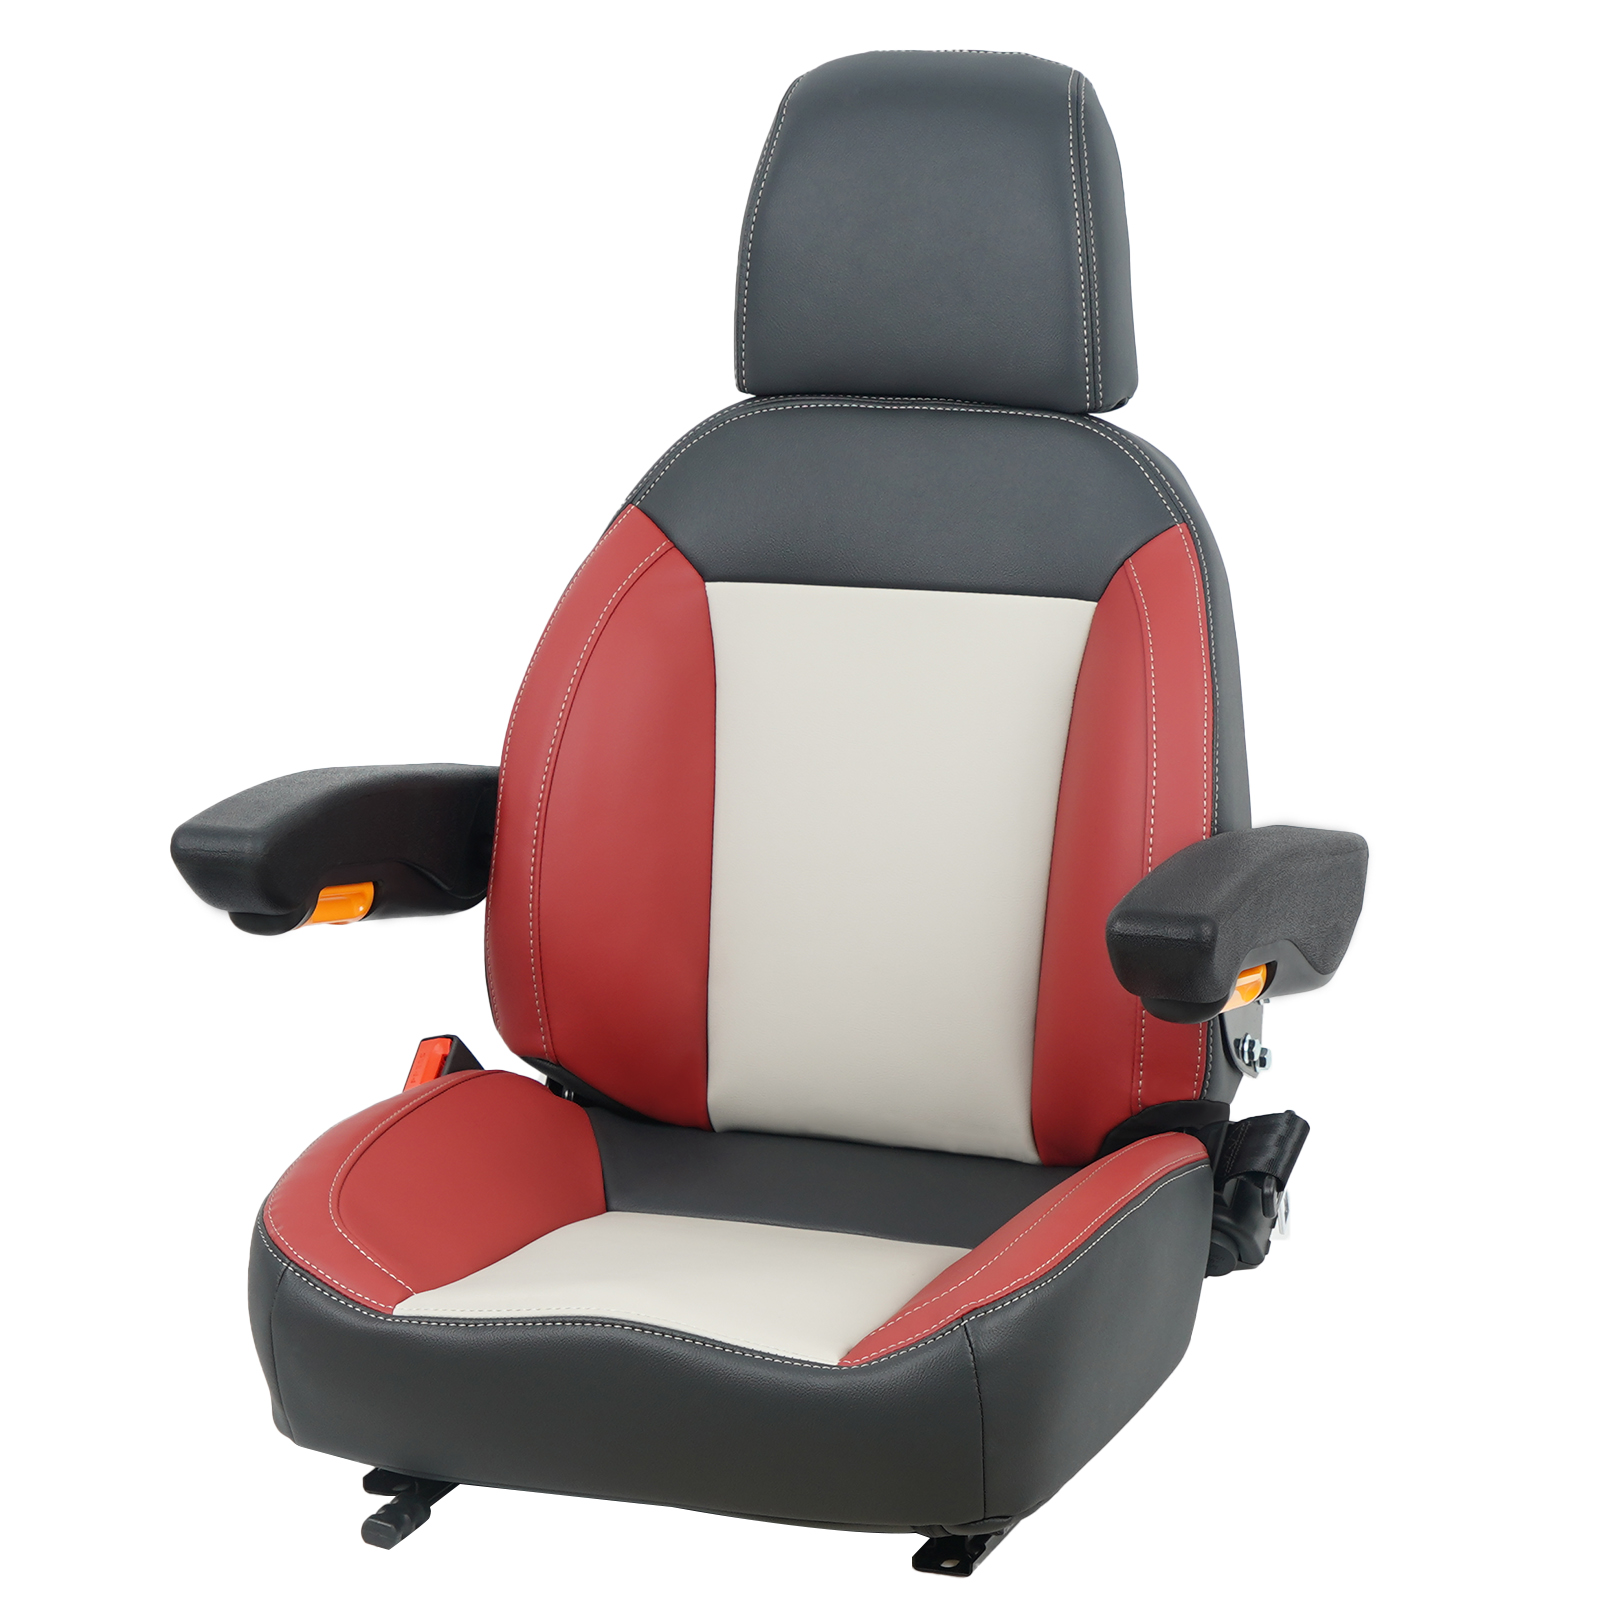 Red & Black Garden Tractor Seat Replacement, Zero Turn Riding Mower Seat